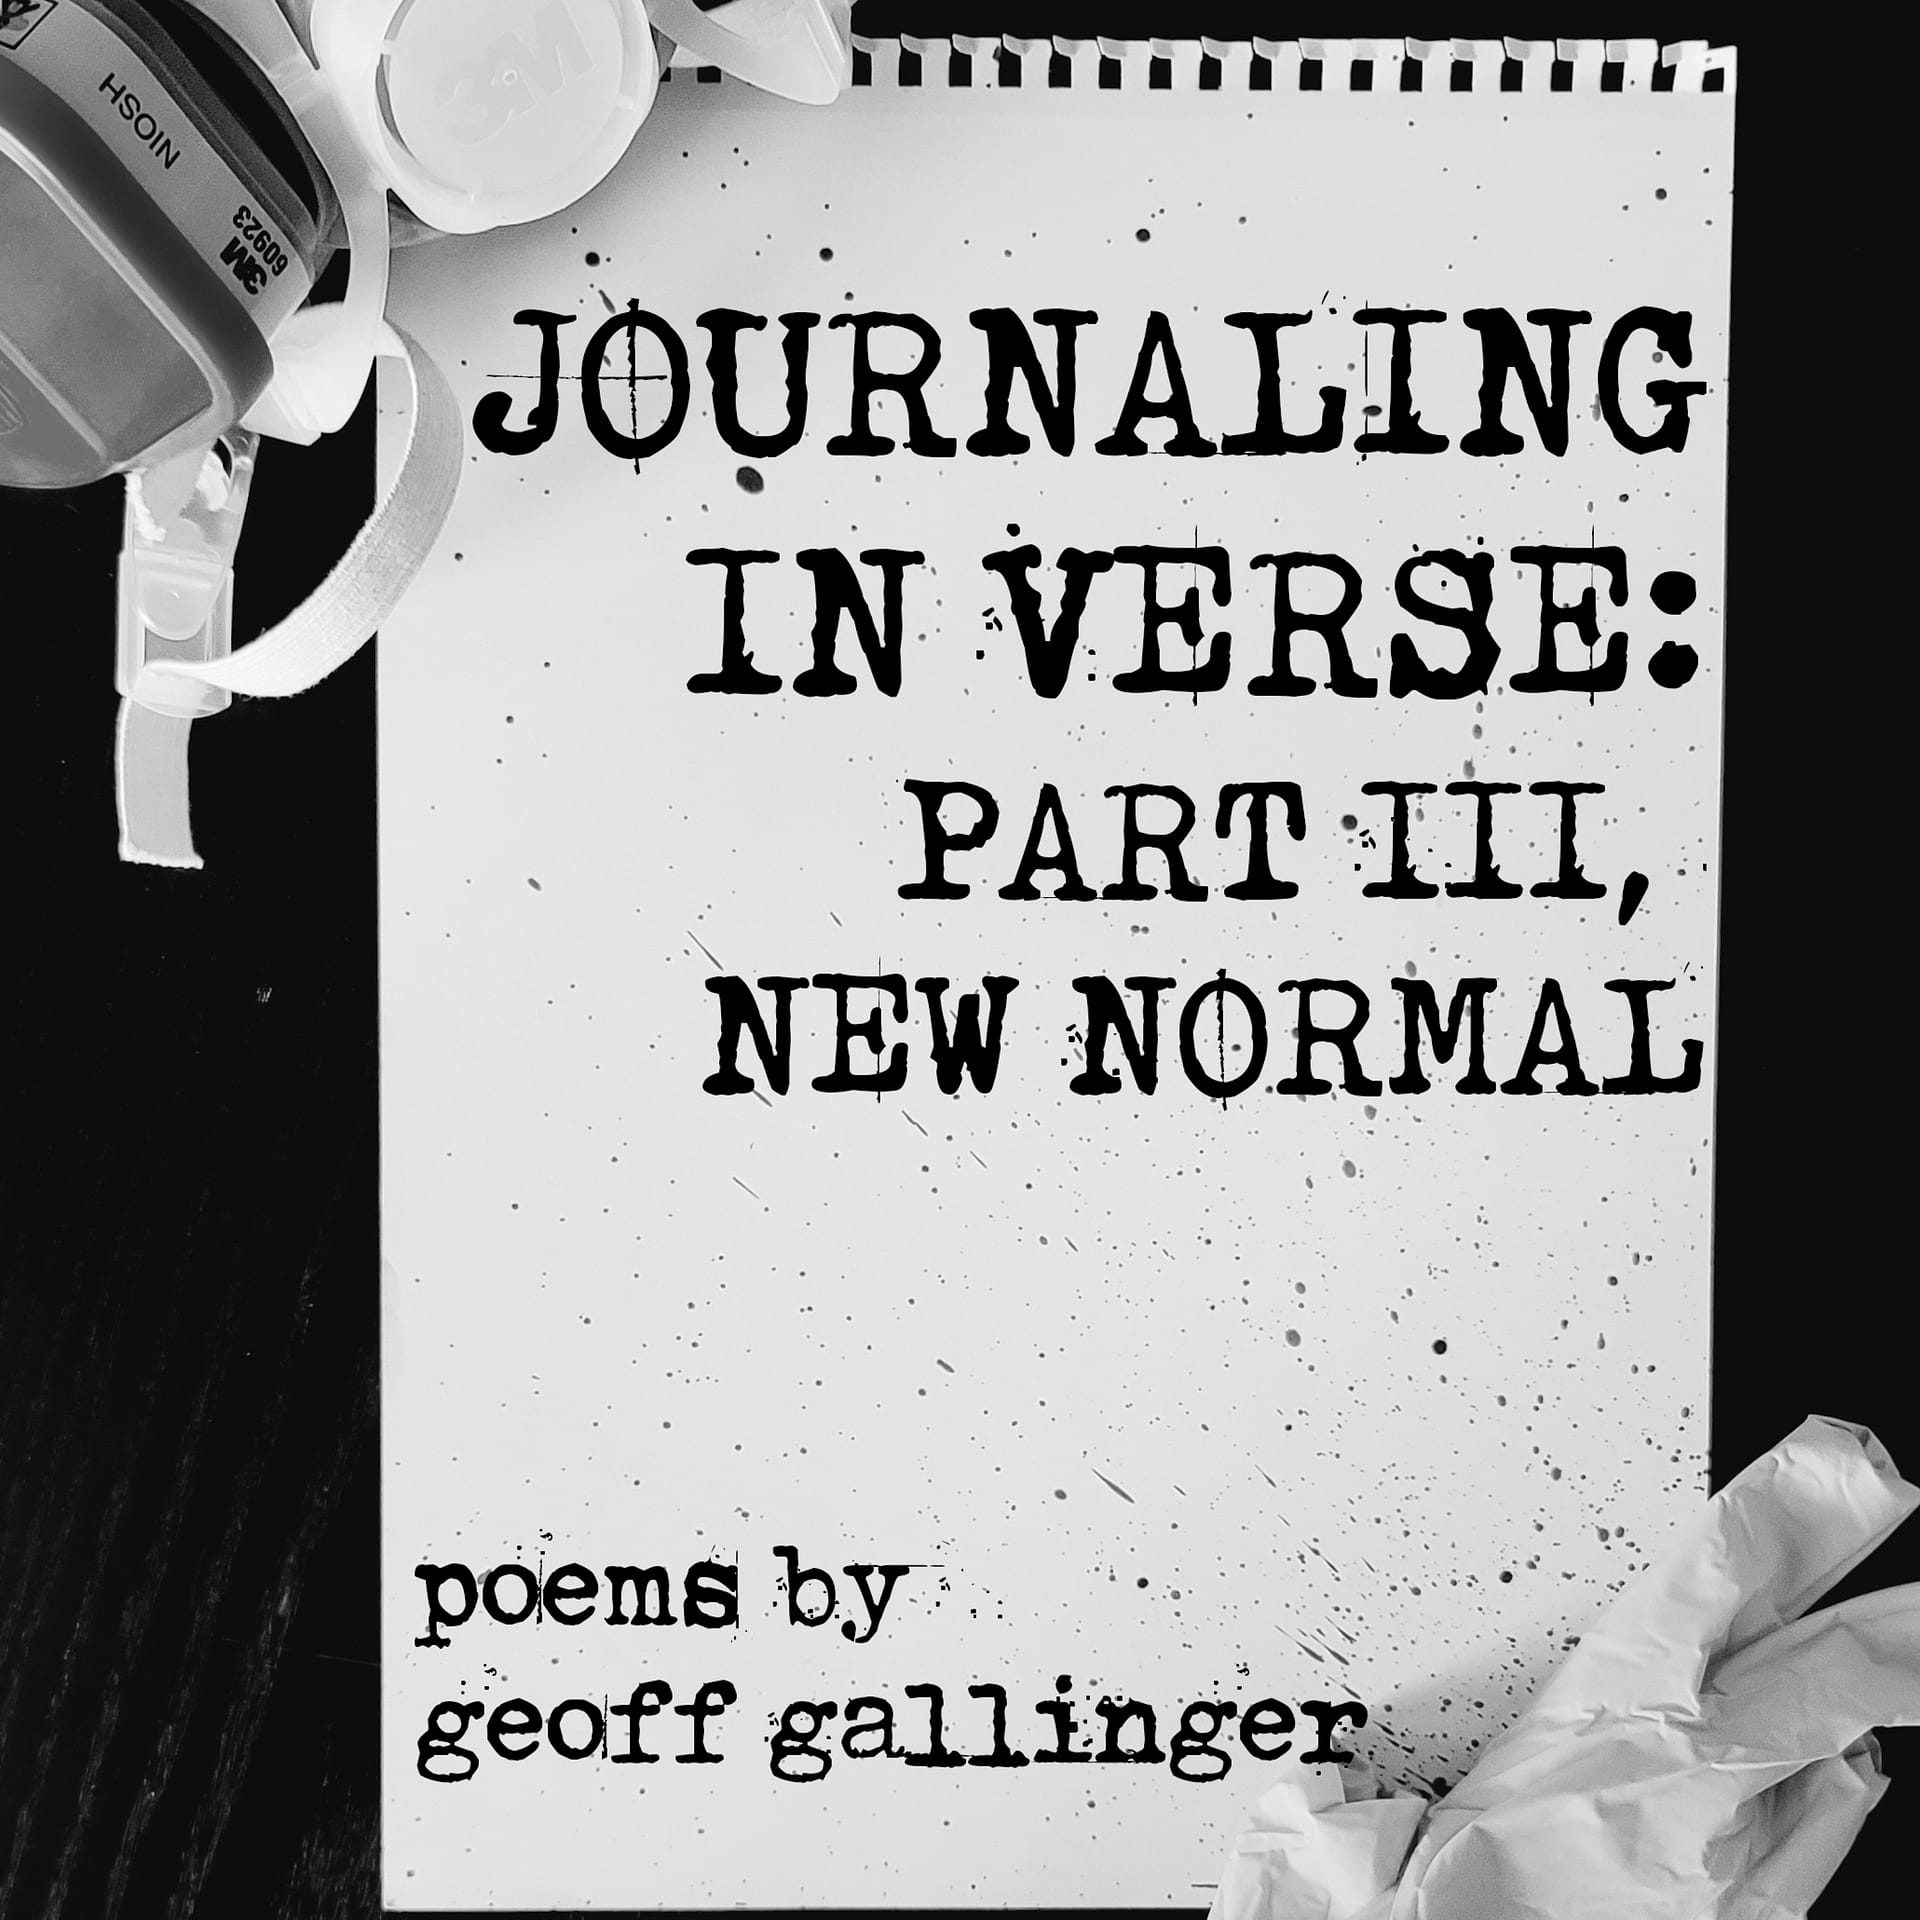 Journaling in Verse, Part III: New Normal, by Geoff Gallinger